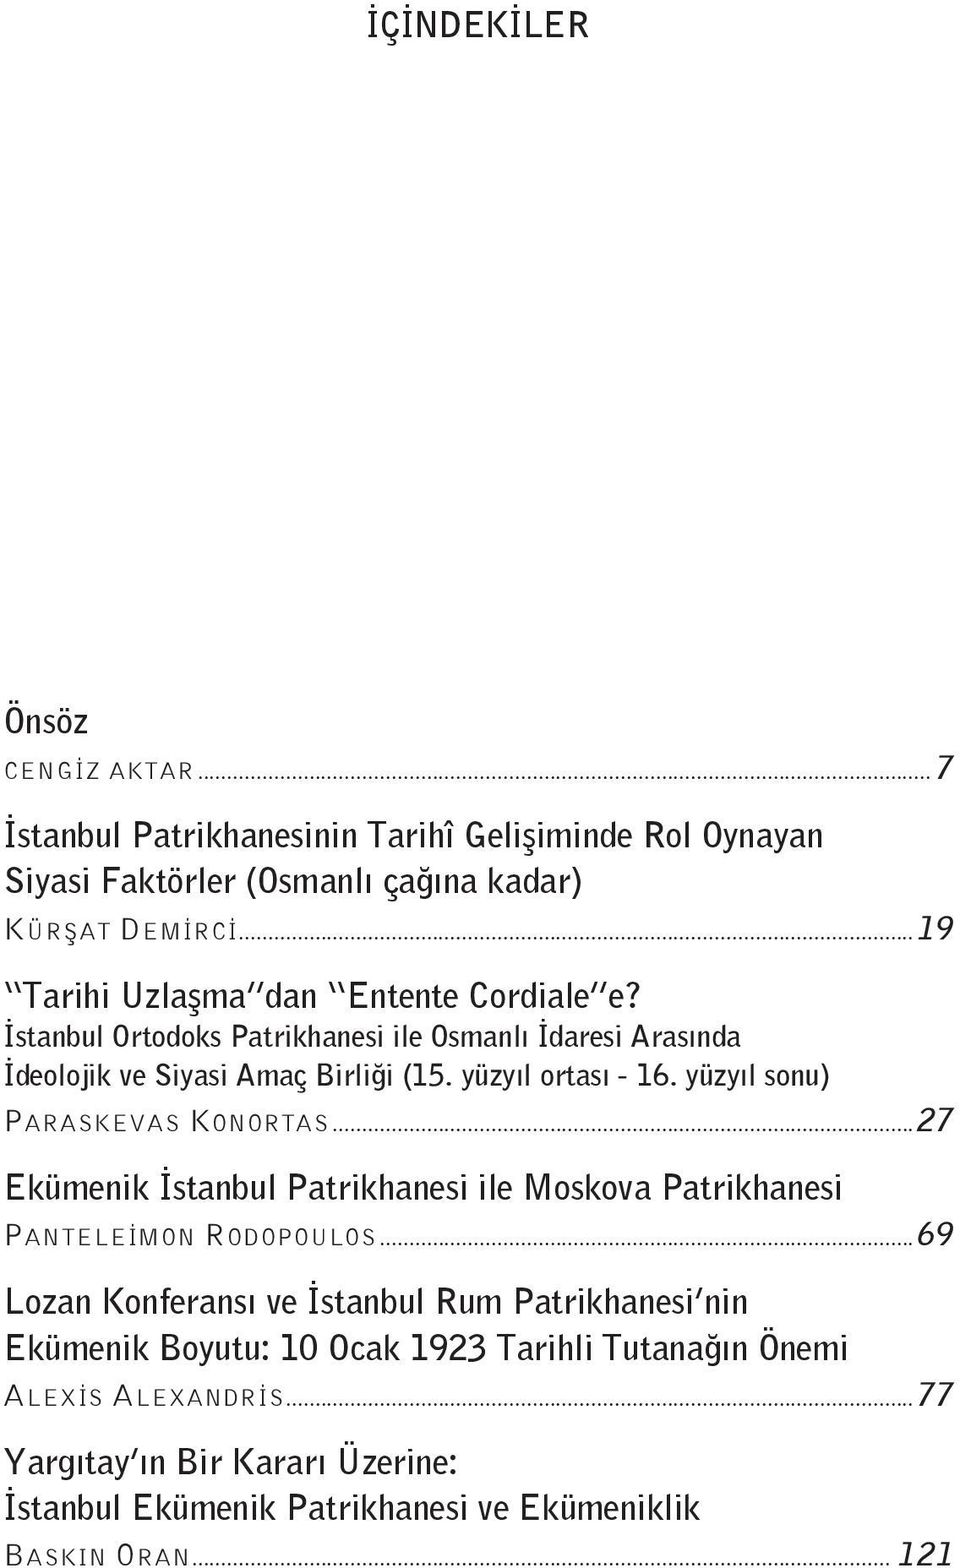 yüzyıl sonu) PARASKEVAS KONORTAS...27 Ekümenik İstanbul Patrikhanesi ile Moskova Patrikhanesi PANTELEİMON RODOPOULOS.